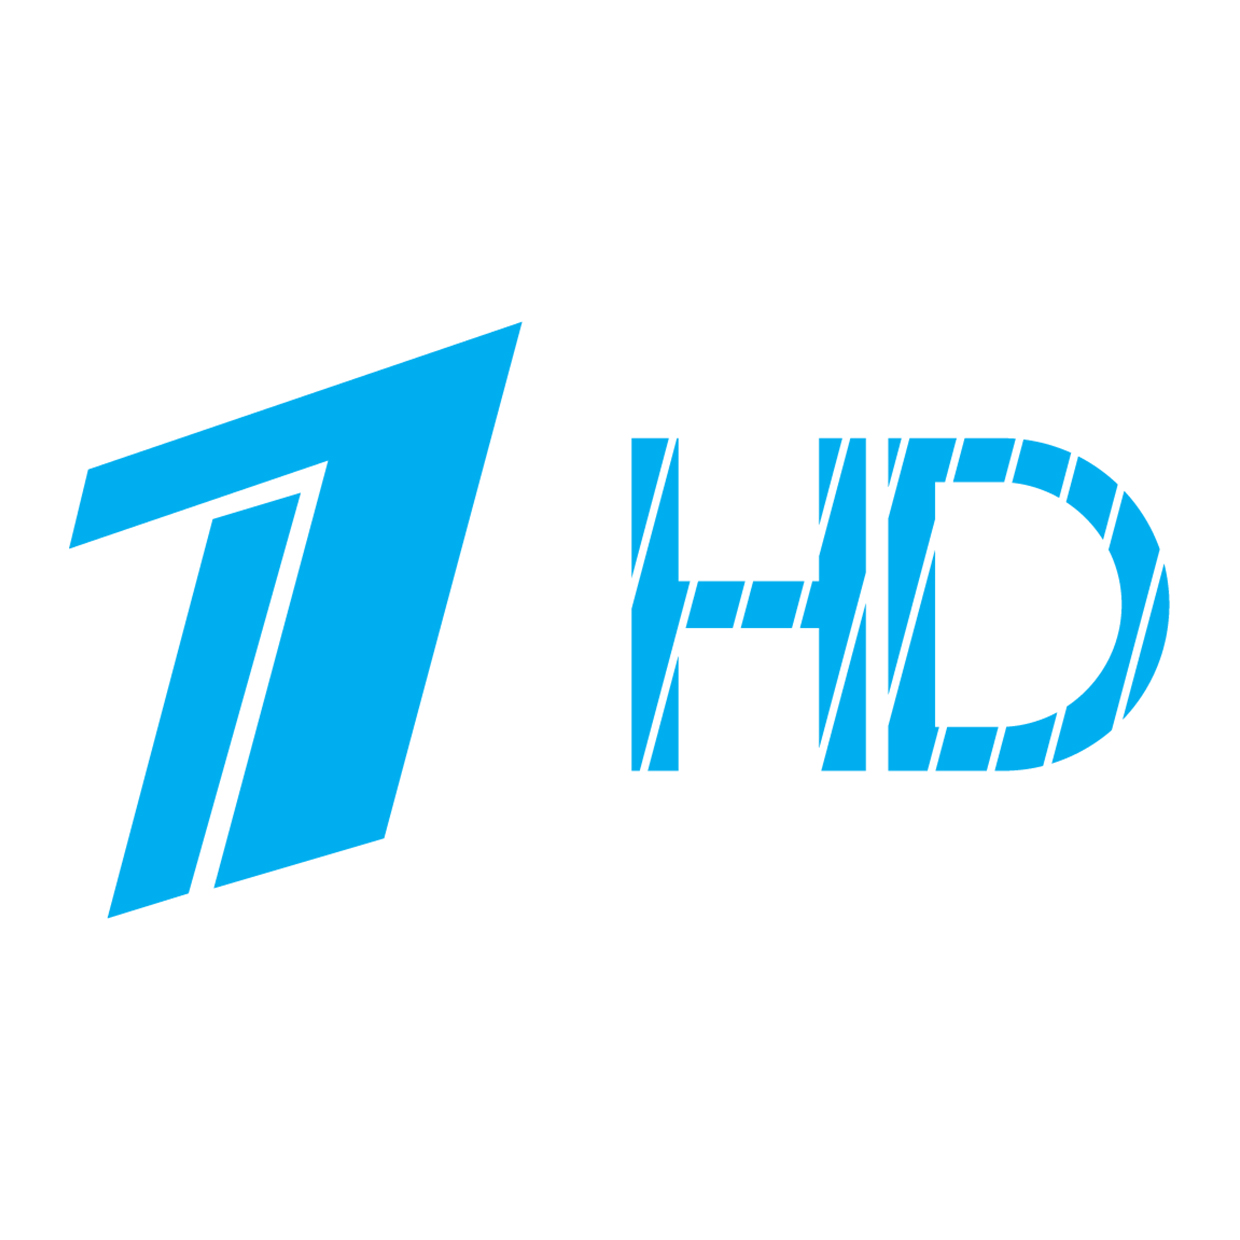 Канал тж. Первый канал. Лого первого канала. 1 Канал HD логотип. Телеканал первый канал.